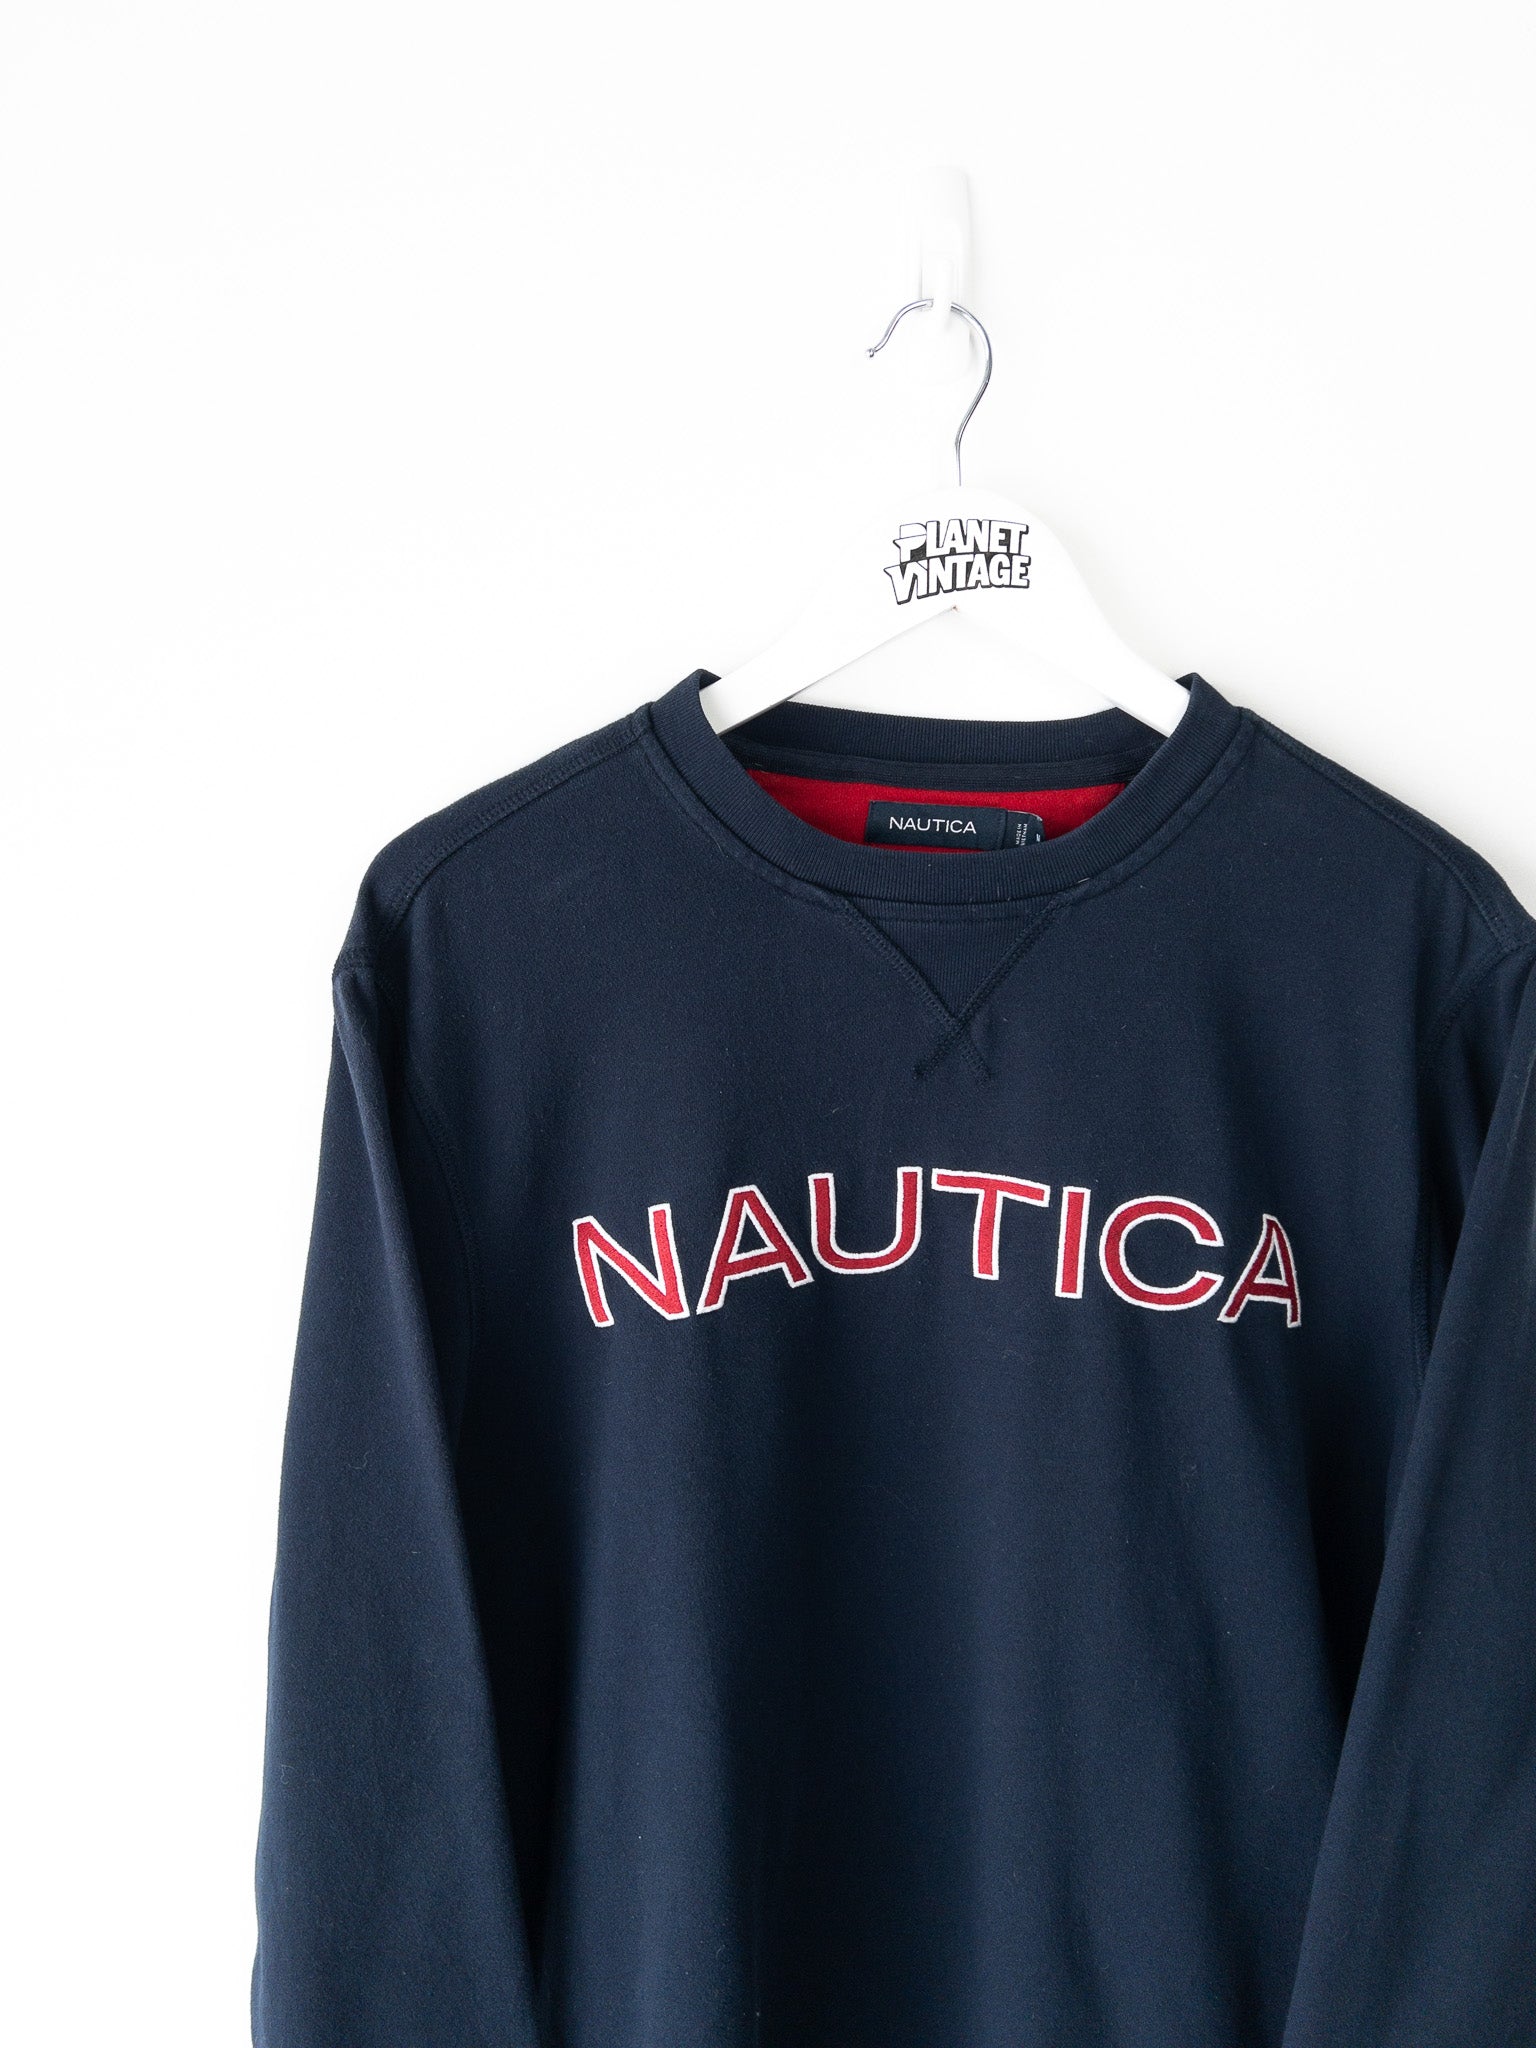 Vintage Nautica Sweatshirt (M)